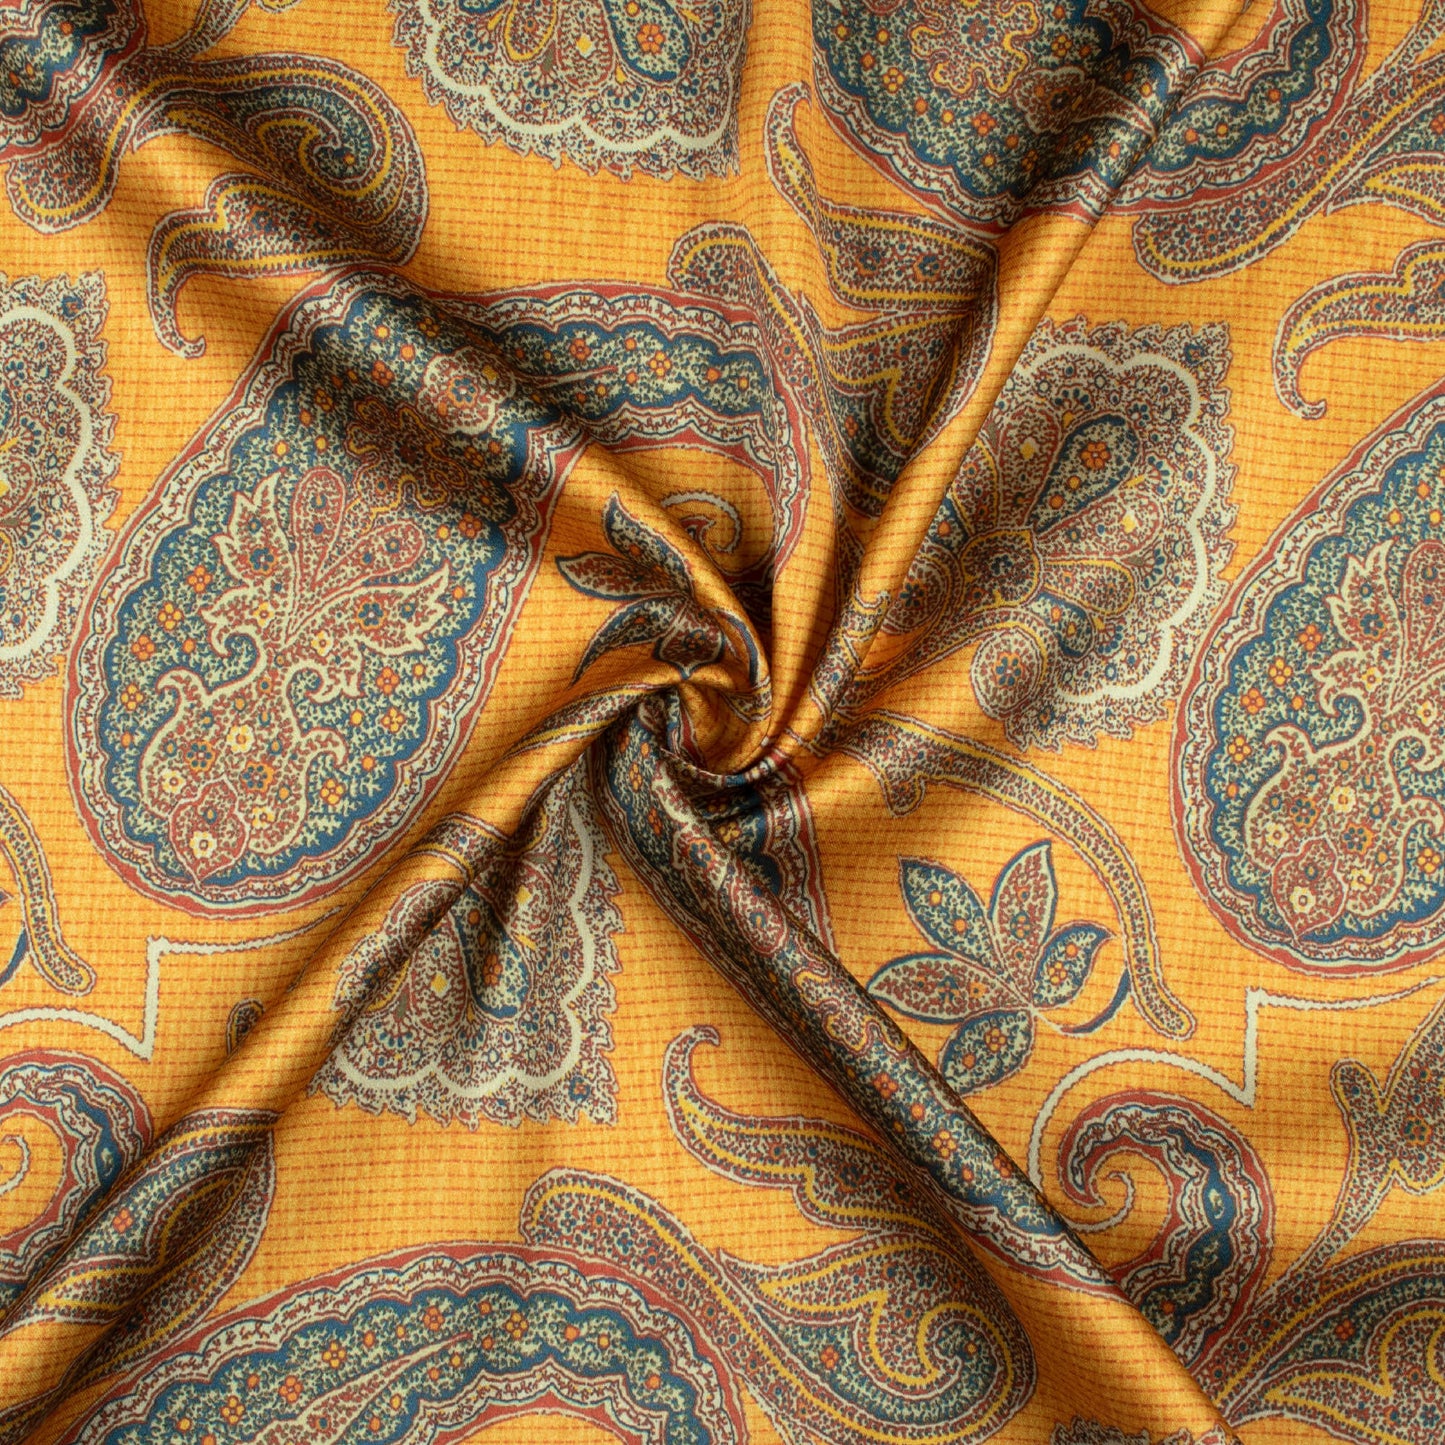 Dijon Yellow And Sacramento Green Paisley Pattern Digital Print Japan Satin Fabric